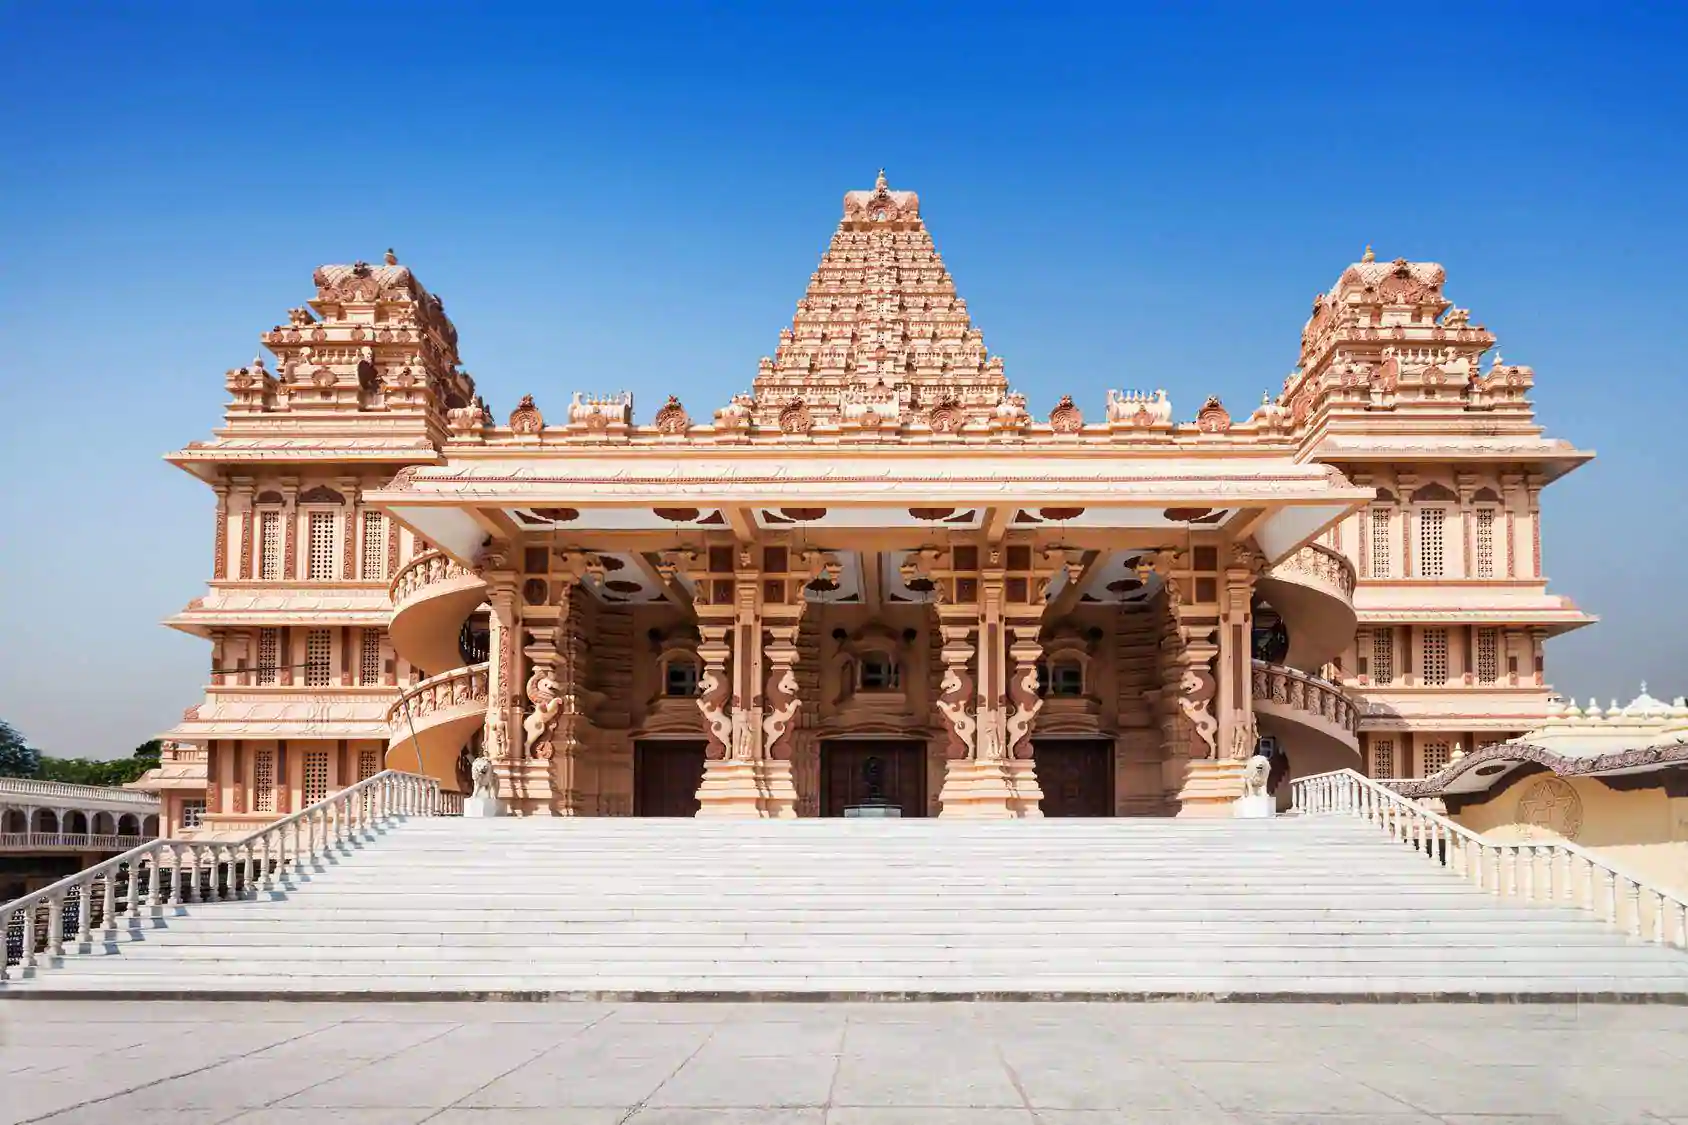 Le temple de Chhatarpur